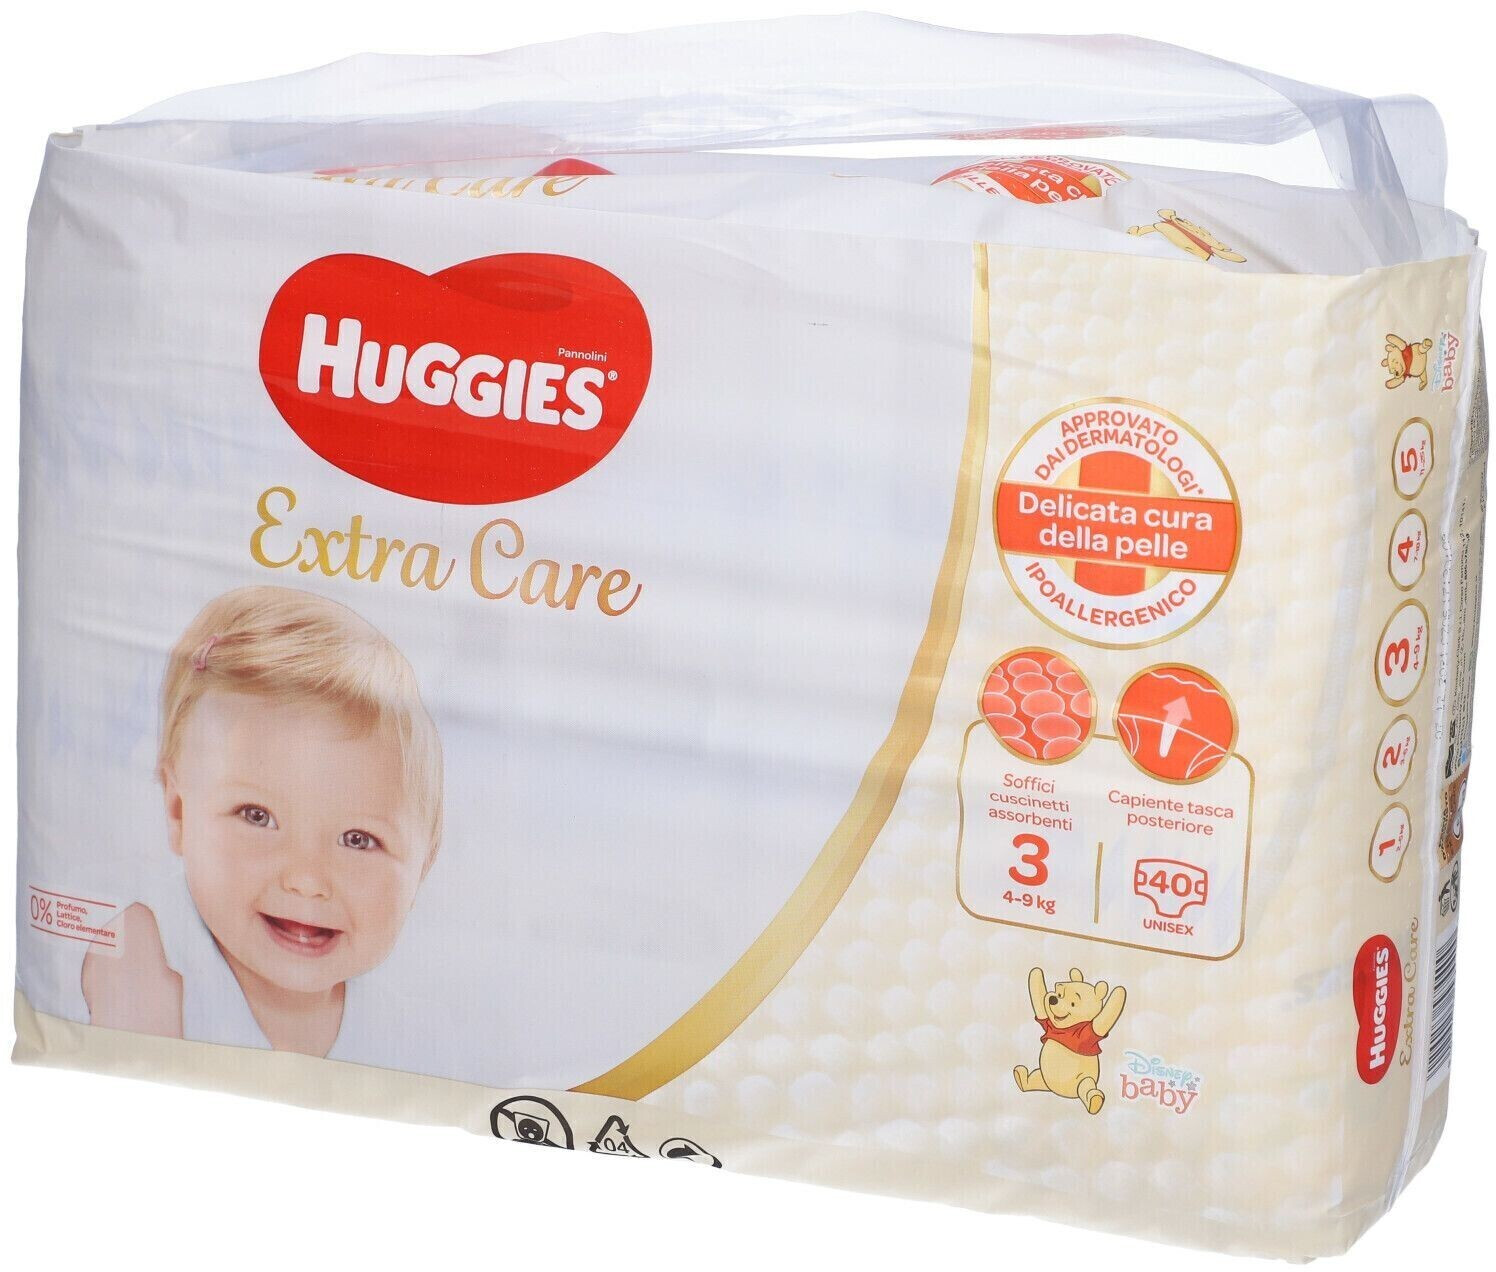 Huggies Extra Care Pañales Newborn Disney Talla 1 (3-5 kg) 160 uds